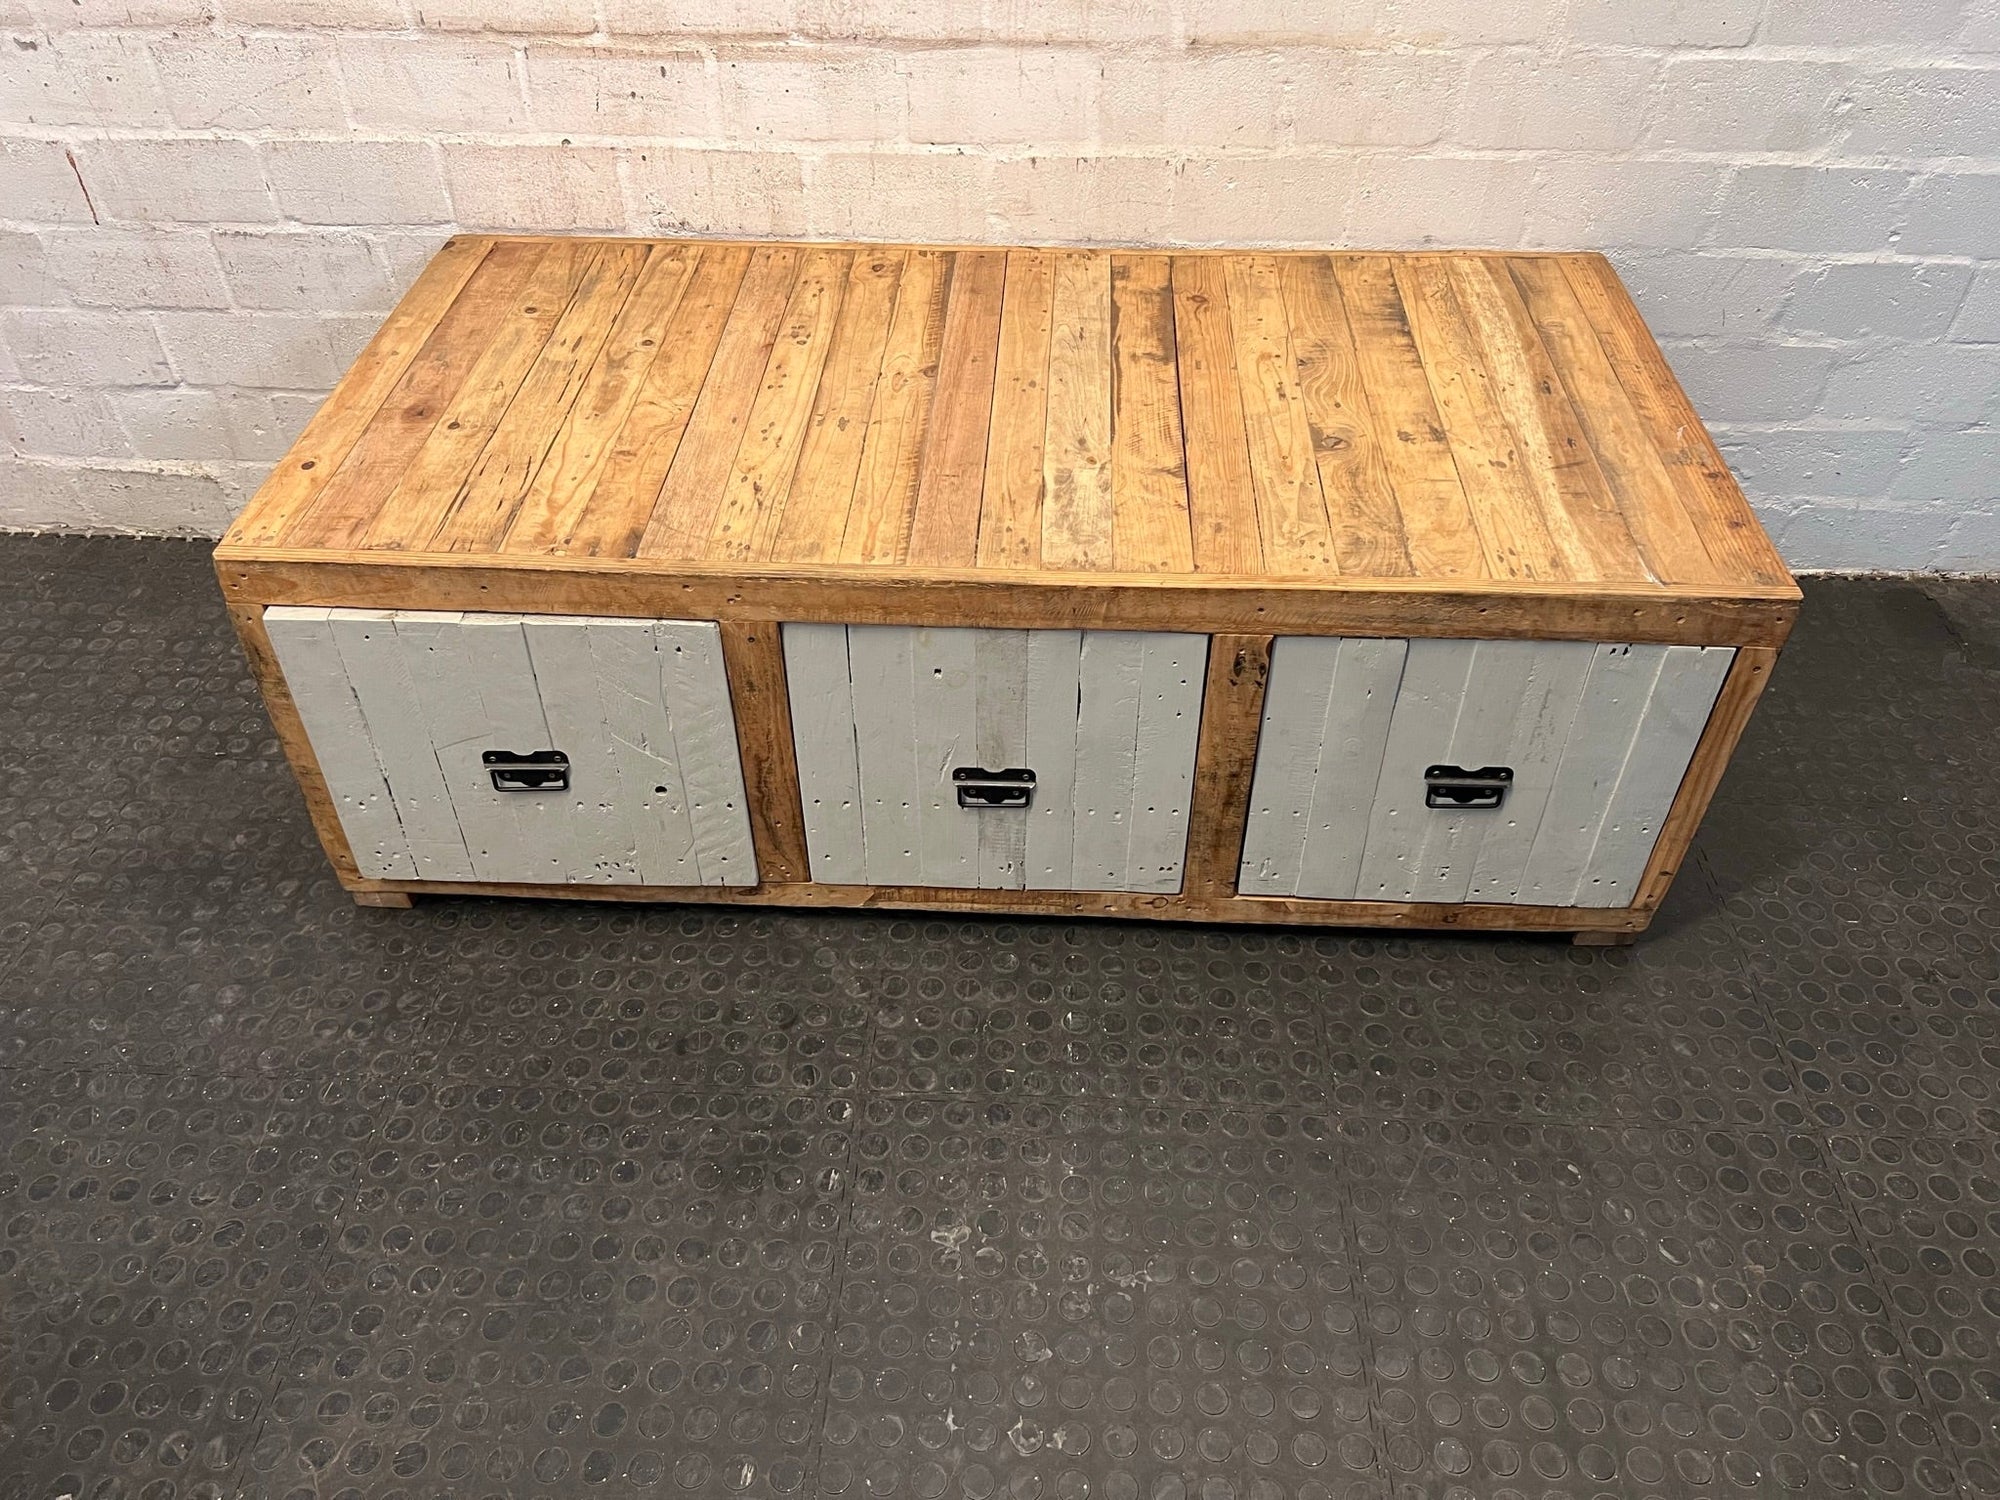 Six Drawer Storage Pallet Wood Coffee Table